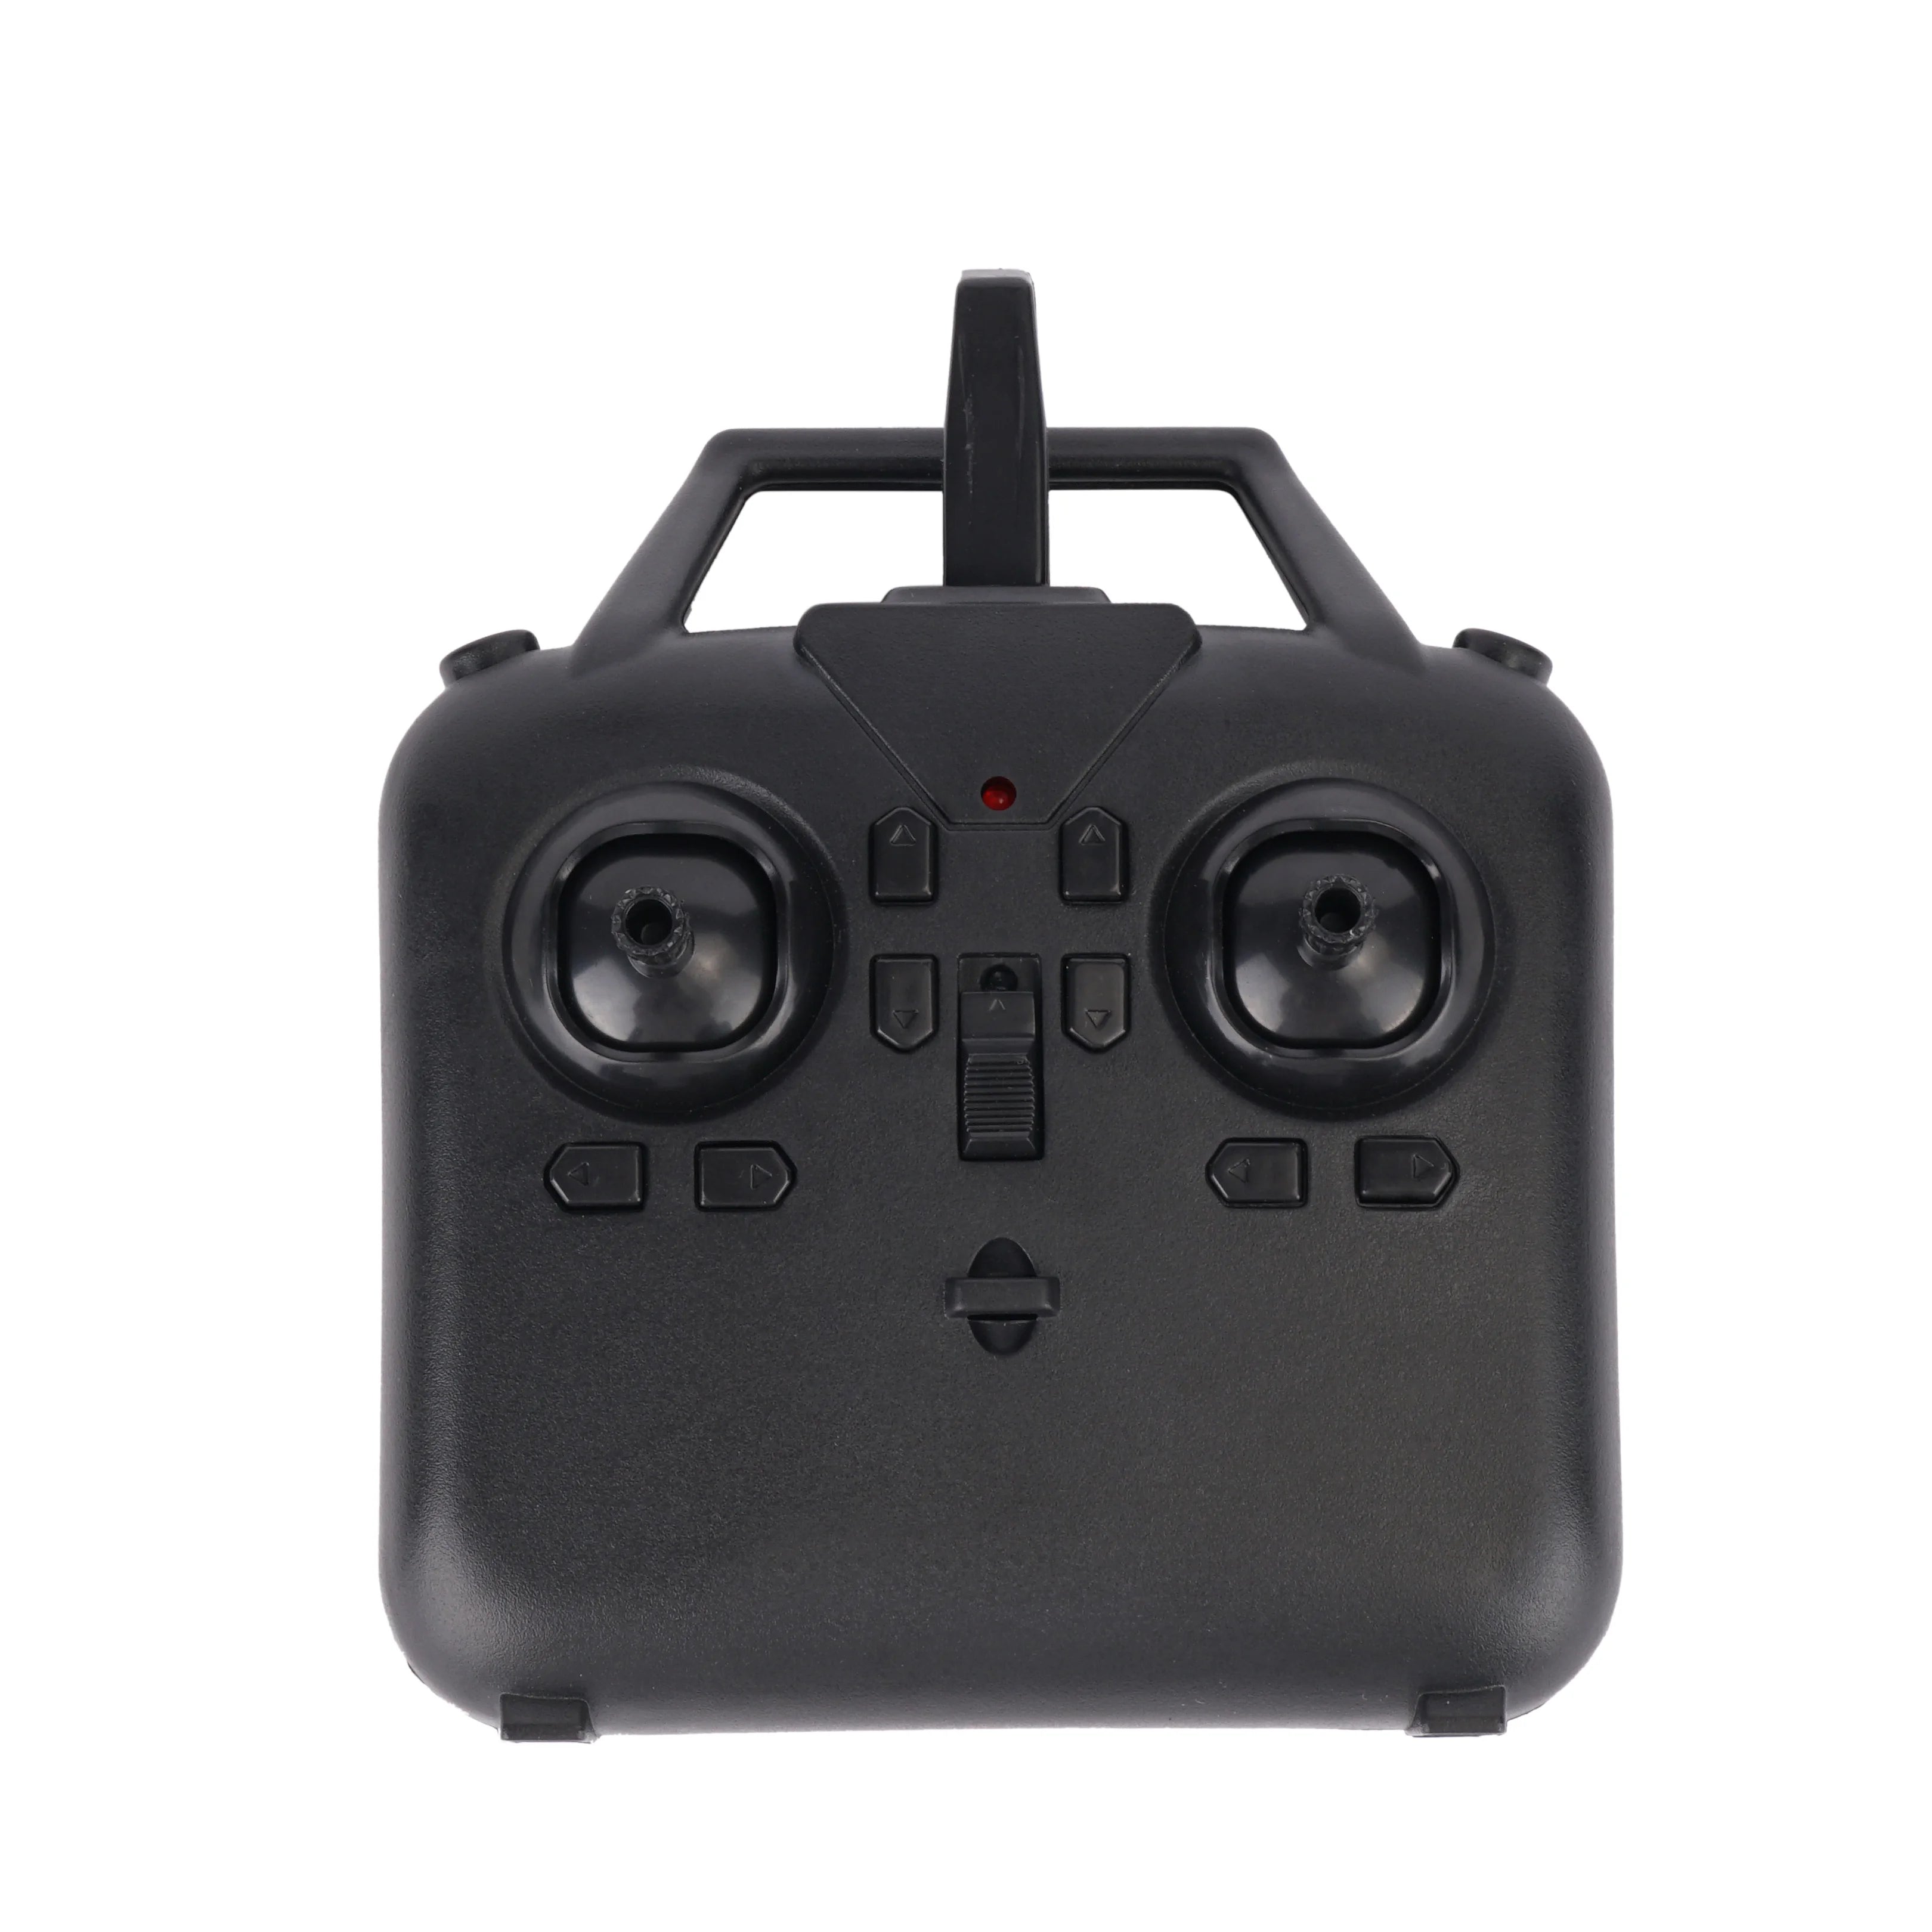 RTF Micro FPV RC Racing Drone, Quadcopter Toys w/ 5.8G S2 800TVL 40CH